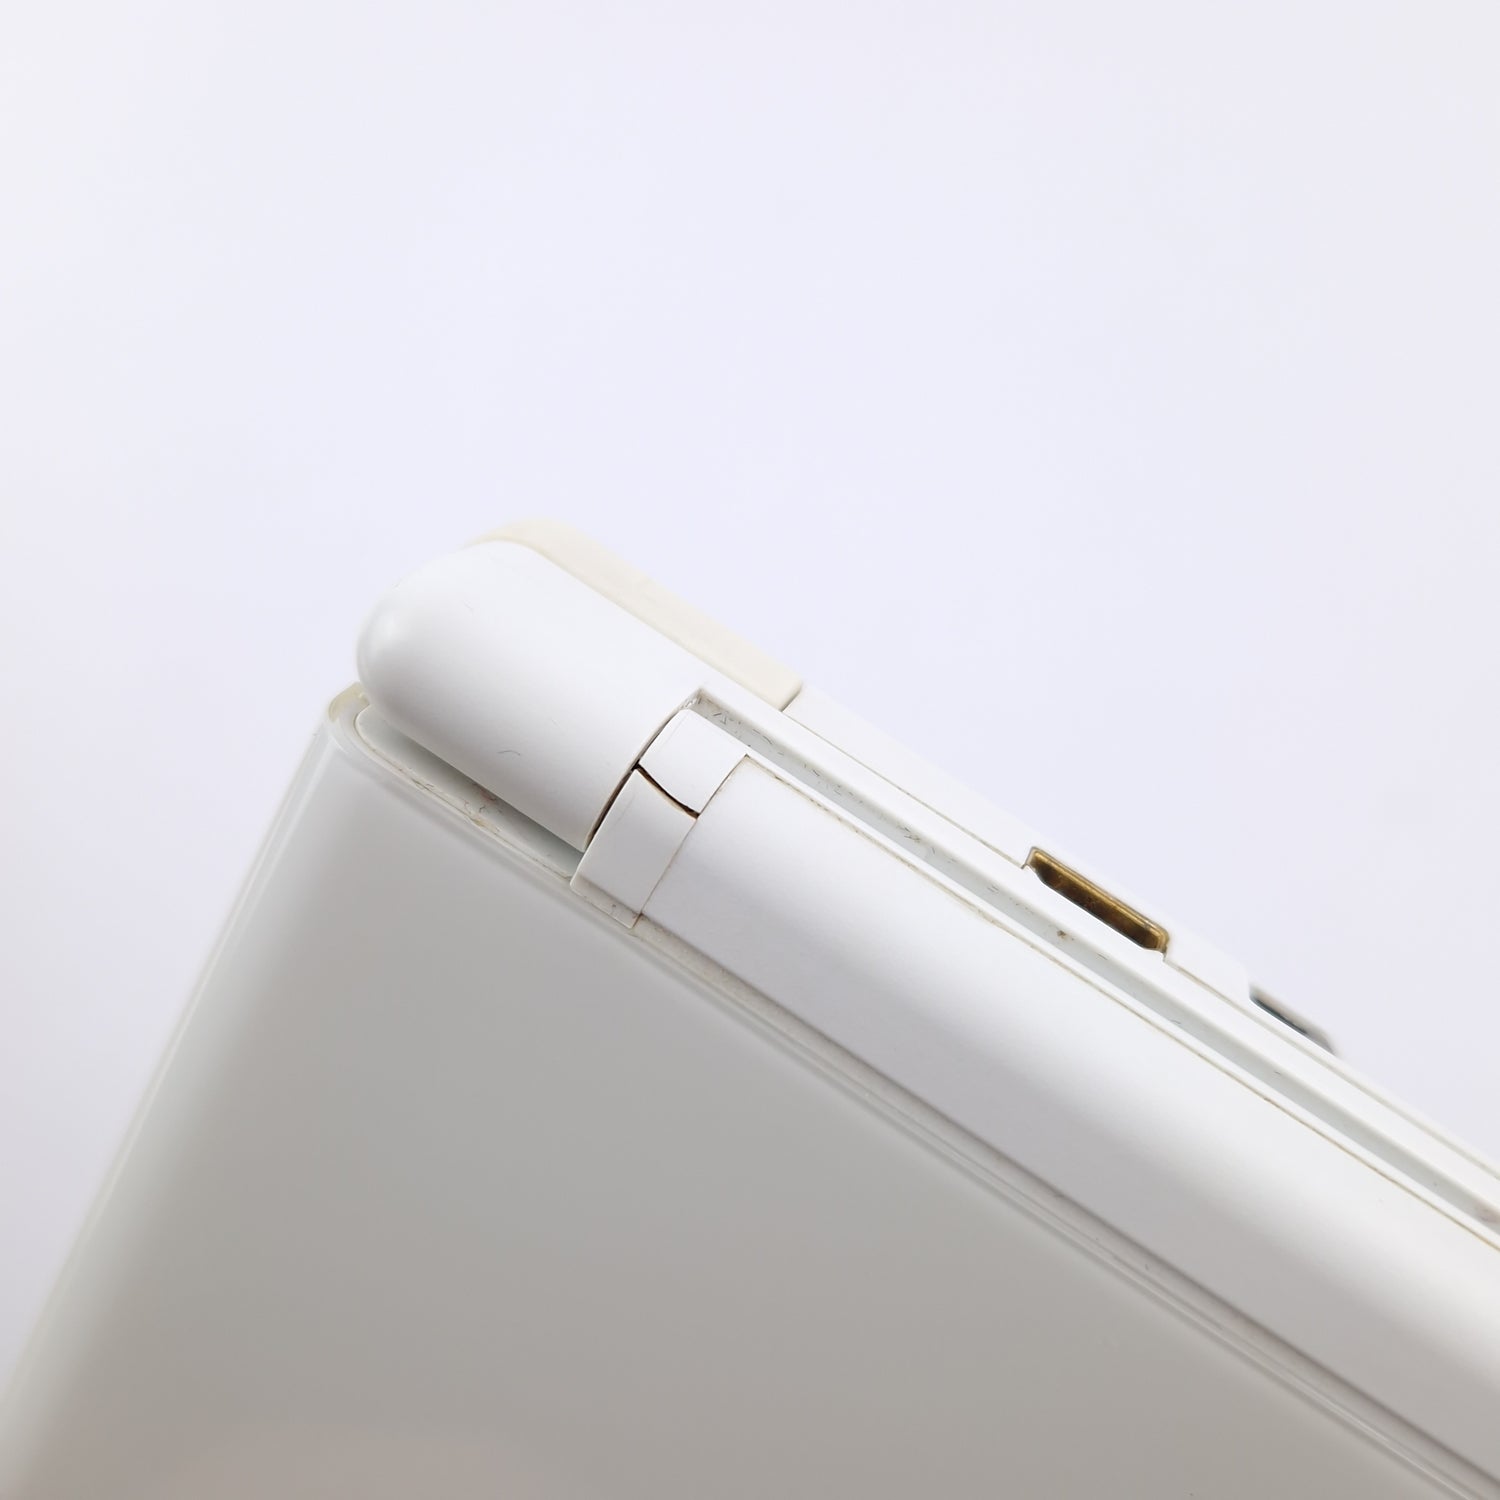 Nintendo DS Lite Konsole : Weiss in OVP ohne Ladekabel - PAL Console